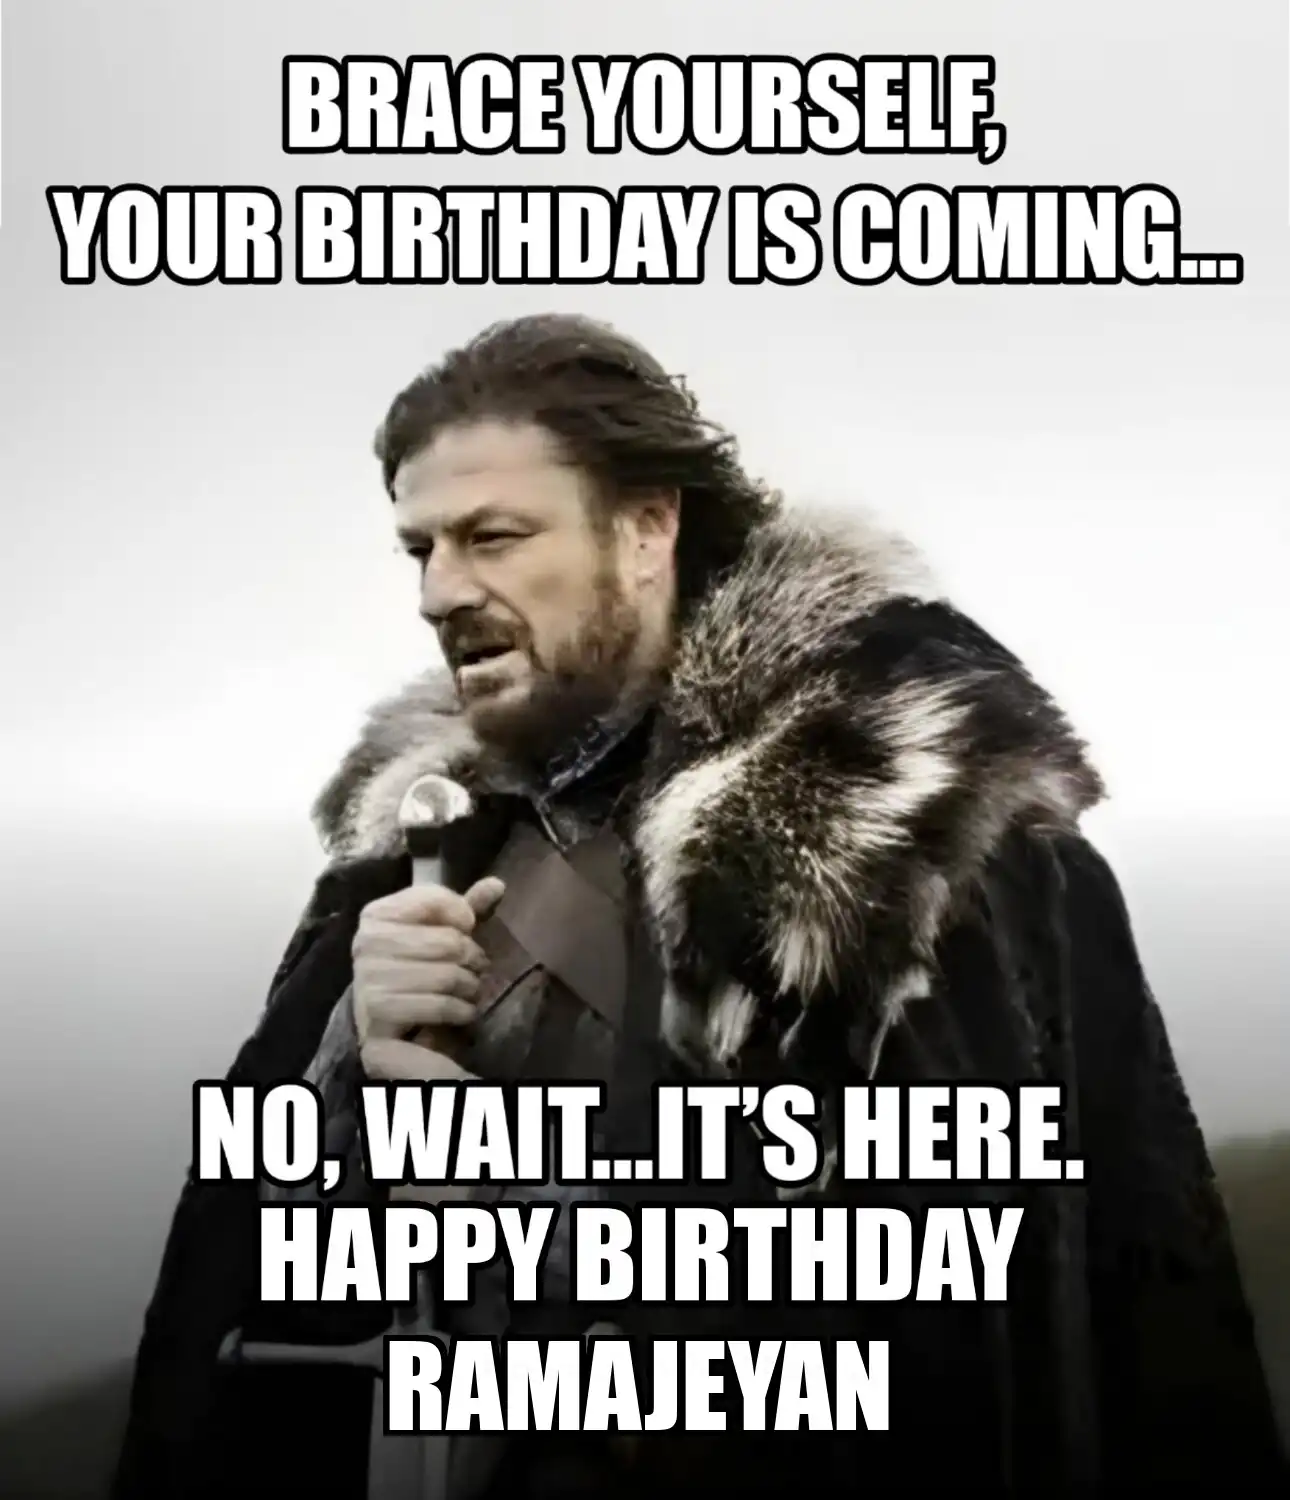 Happy Birthday Ramajeyan Brace Yourself Your Birthday Is Coming Meme